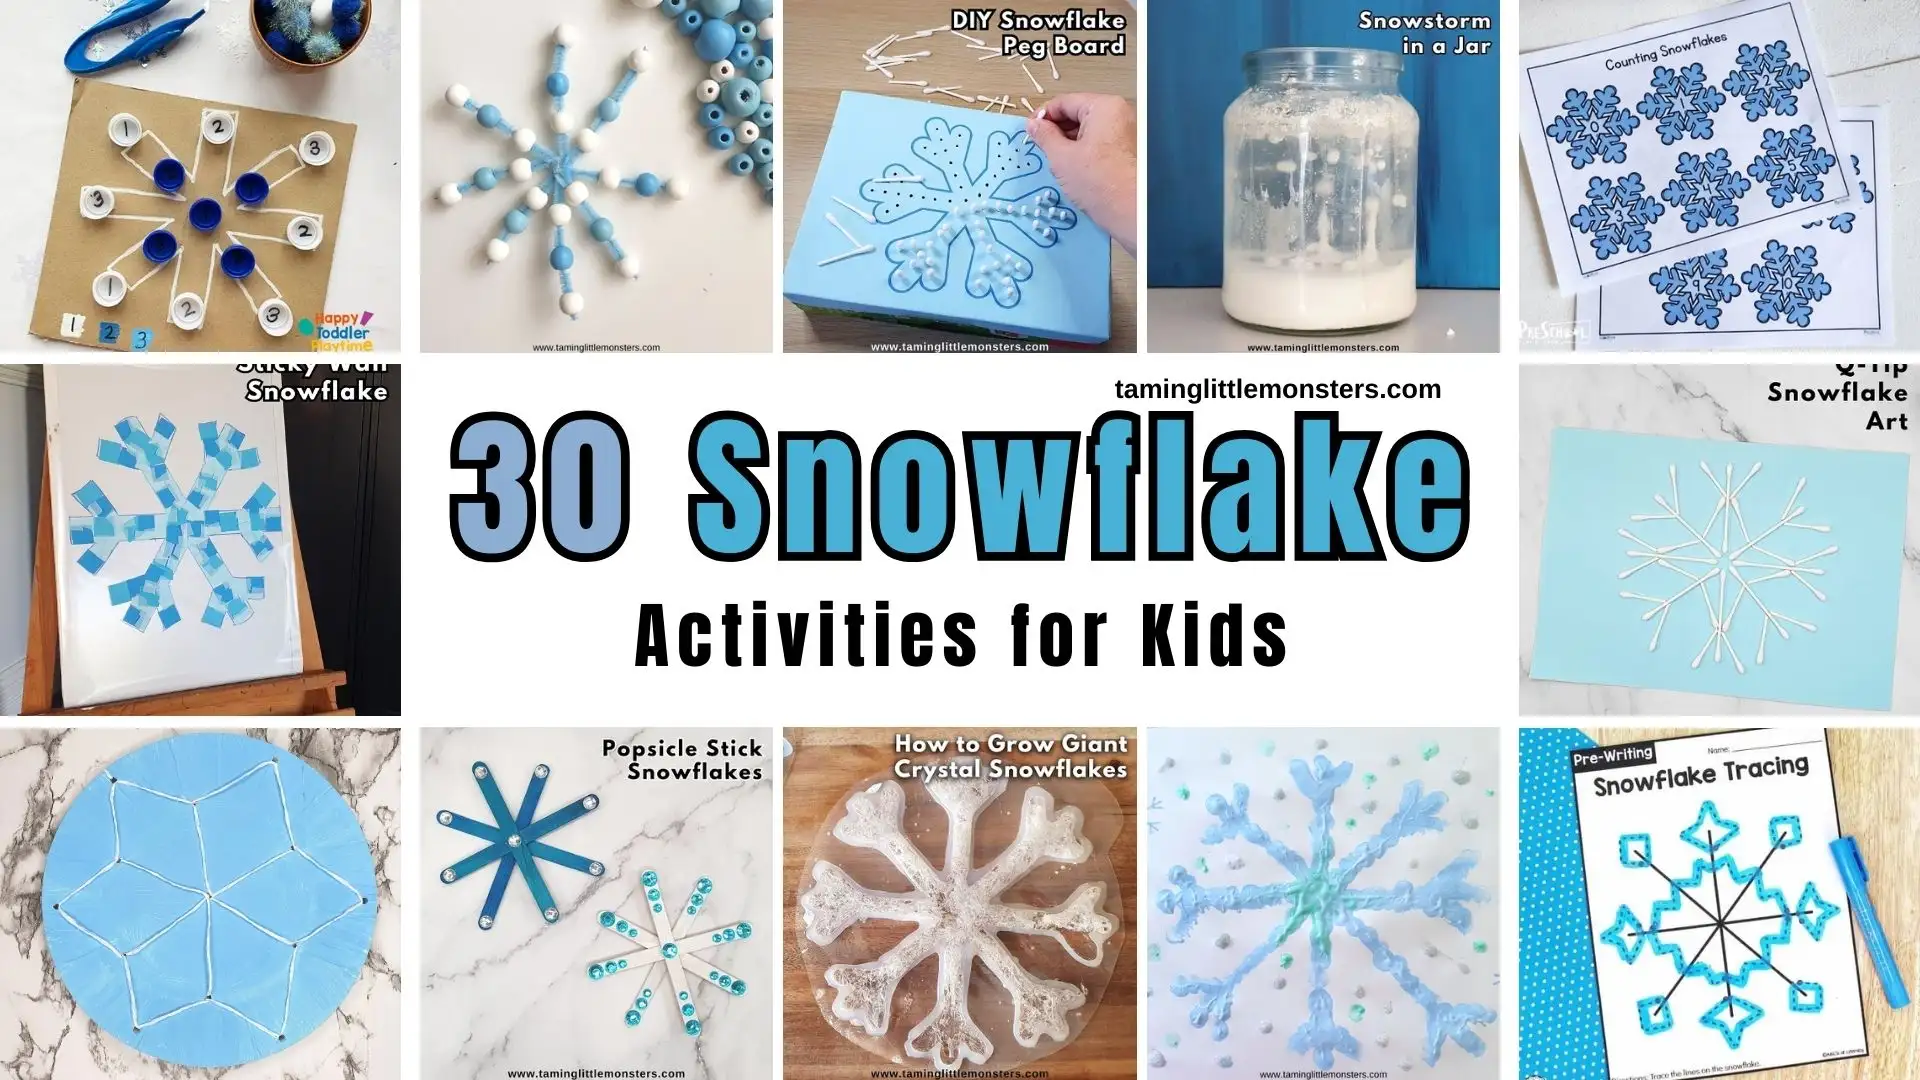 10 Fun Snowflake Crafts for Preschoolers - Playground